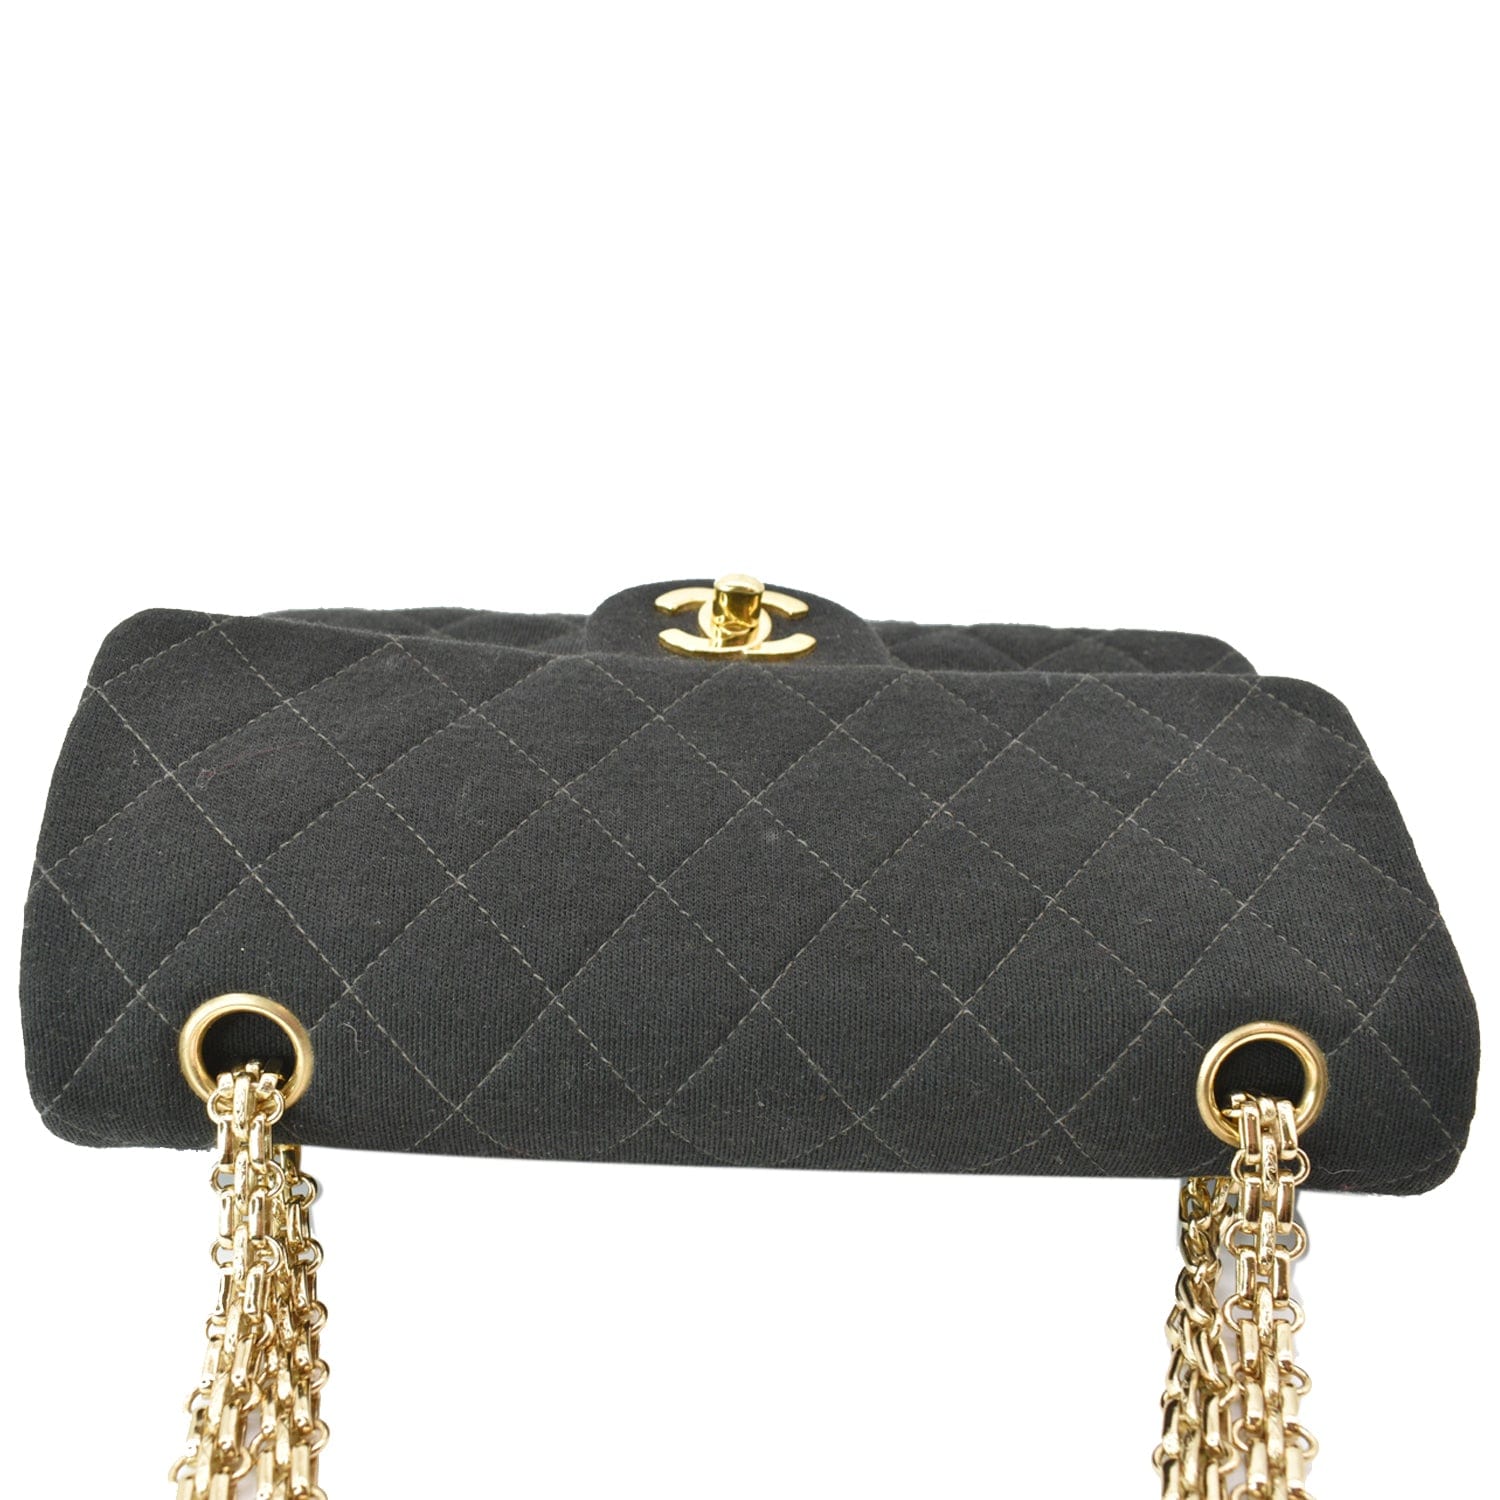 Chanel Classic Flap Vintage Fringe Quilted Jumbo Maxi Jean Blue Denim Bag